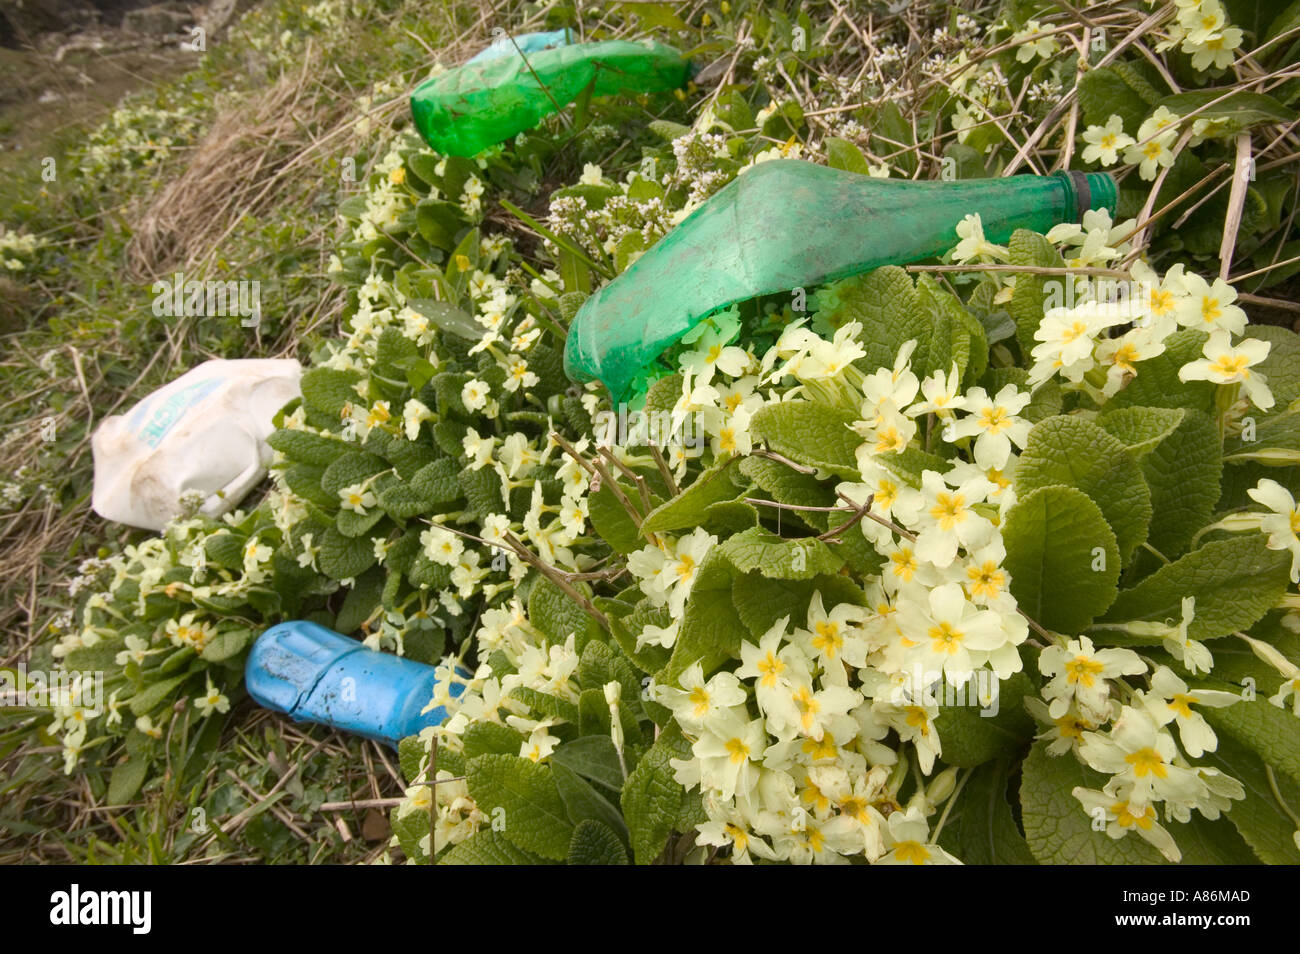 Marine rubbish washed ashore and lying on wildflowers Dumfrieshire coast Scotland Stock Photo